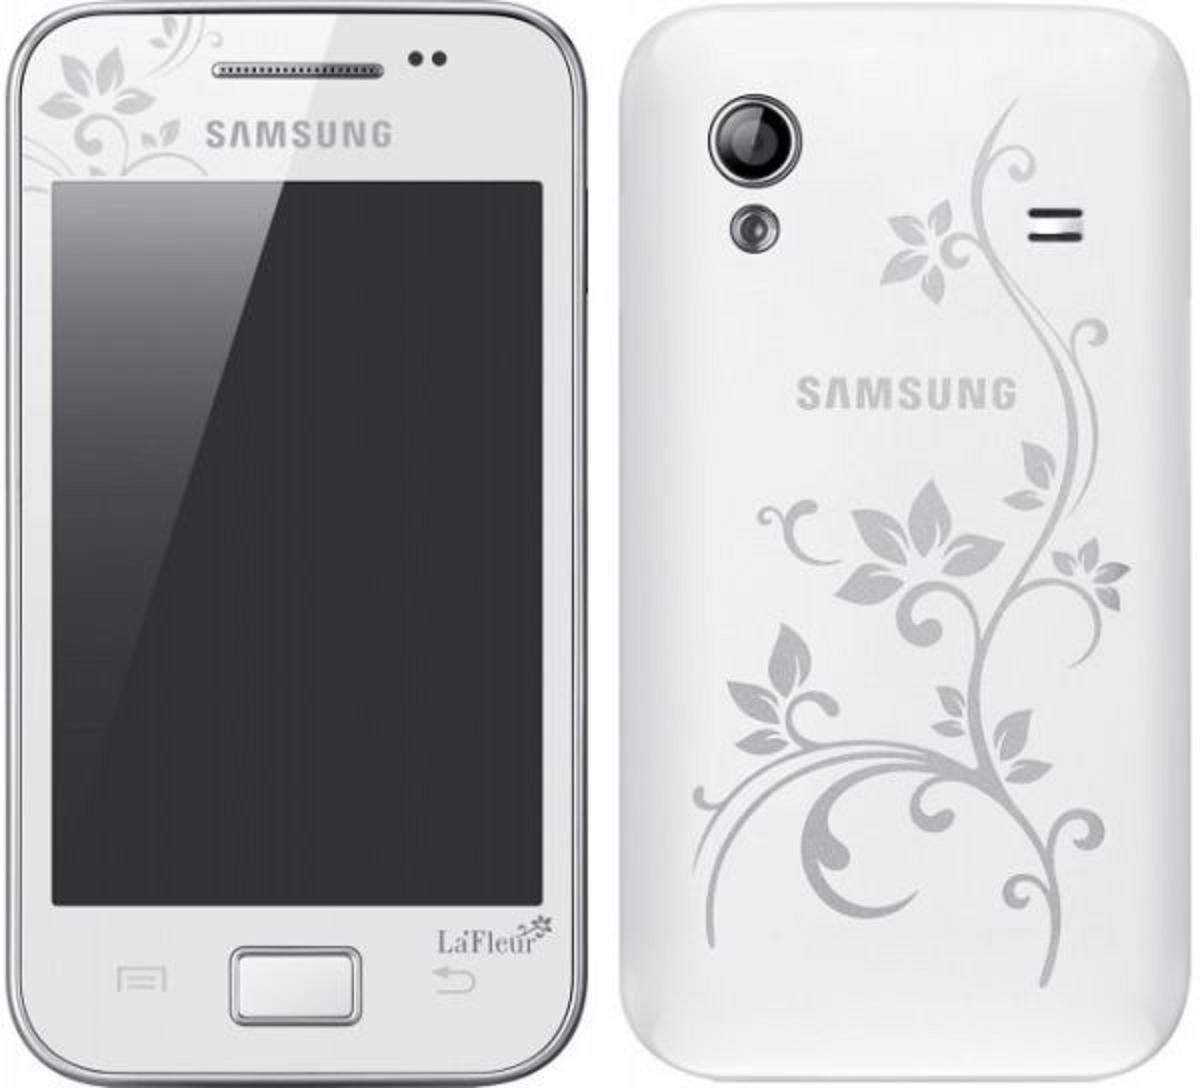 Самсунг la fleur. Galaxy Ace la fleur gt-s5830i. Samsung Galaxy la fleur s5830. Samsung la fleur gt-s5830i. La fleur Samsung gt-s5830 Galaxy Ace.